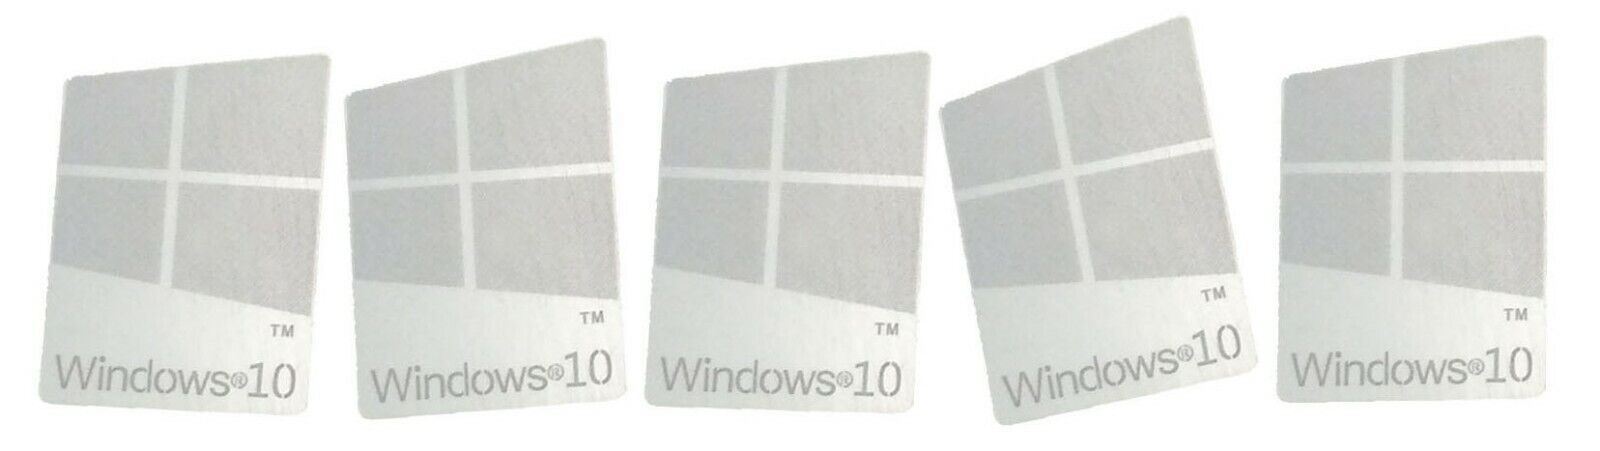 5 PCS Window 10 Silver Chrome Color Badge Logo Decal Sticker 16mm x 23mm USA